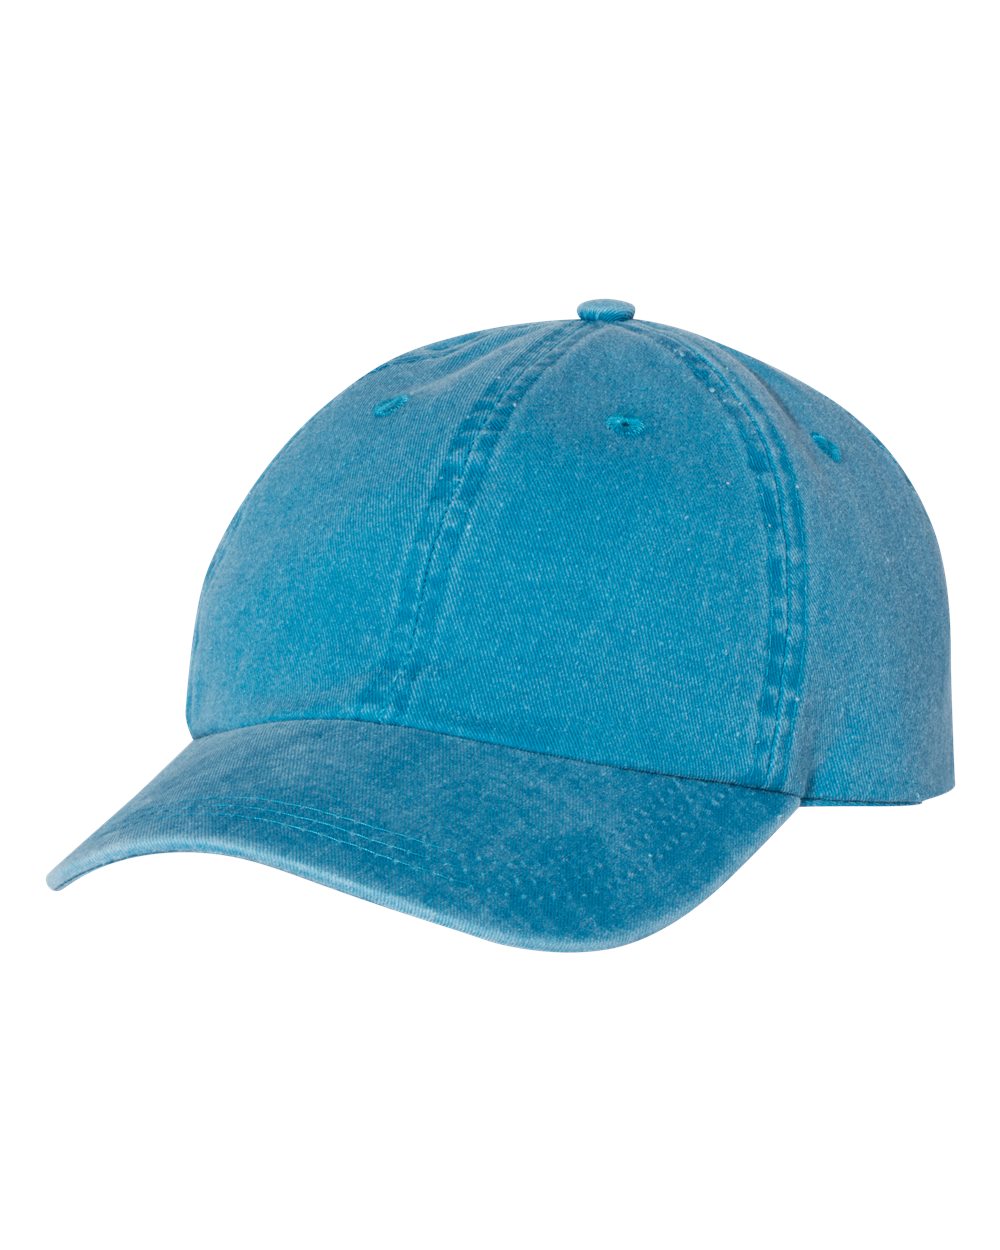 Mega Cap 7601 - Pigment Dyed Cotton Twill Cap $9.10 - Headwear